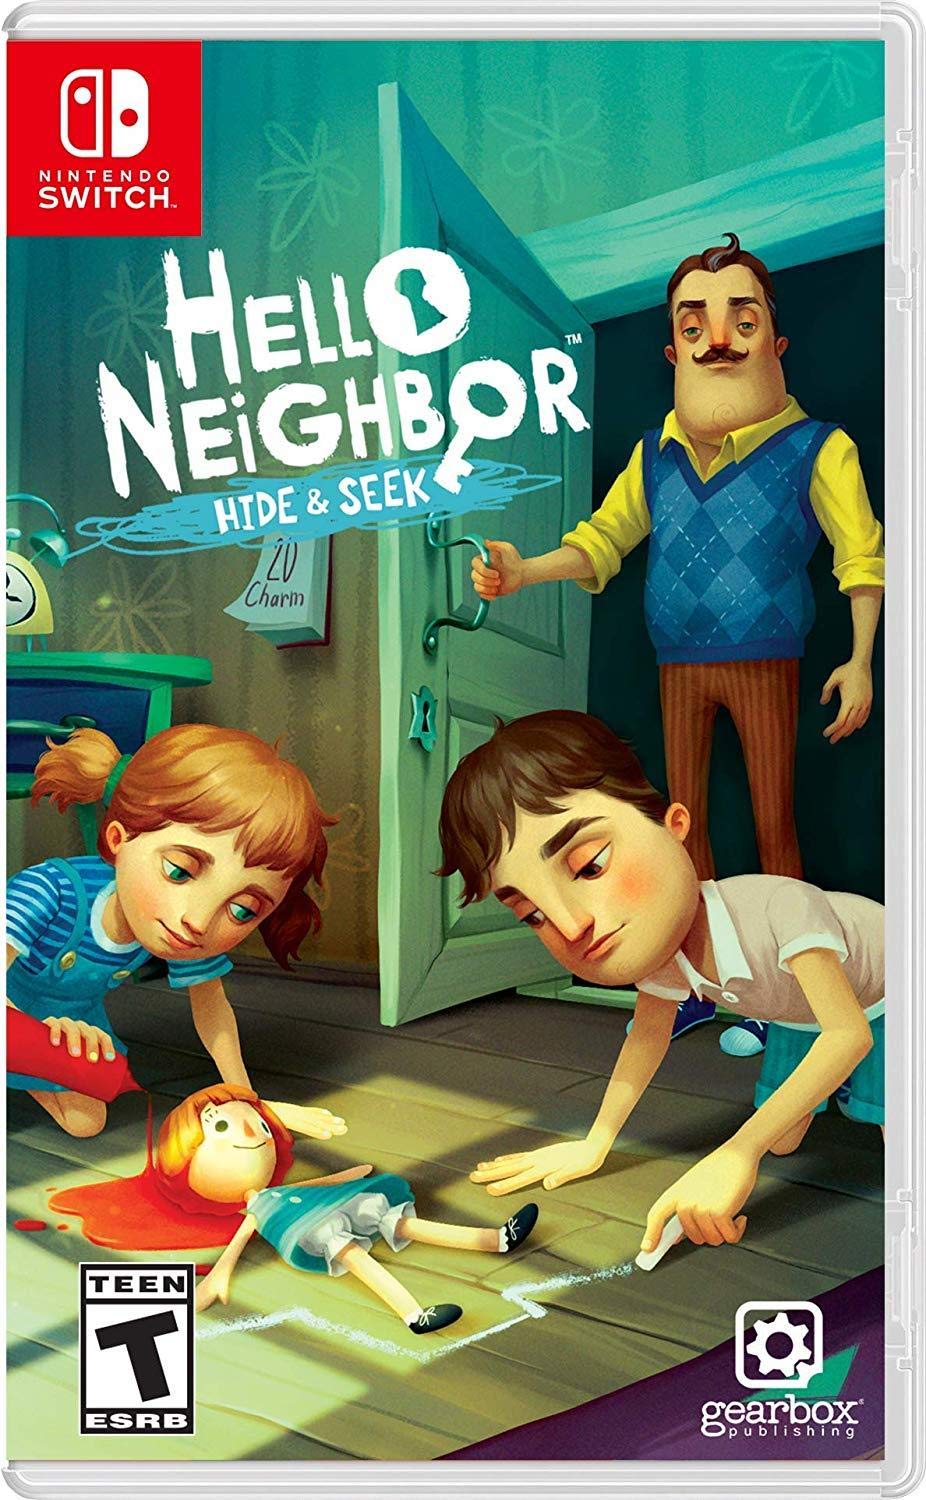 hello neighbor 2 nintendo switch download free